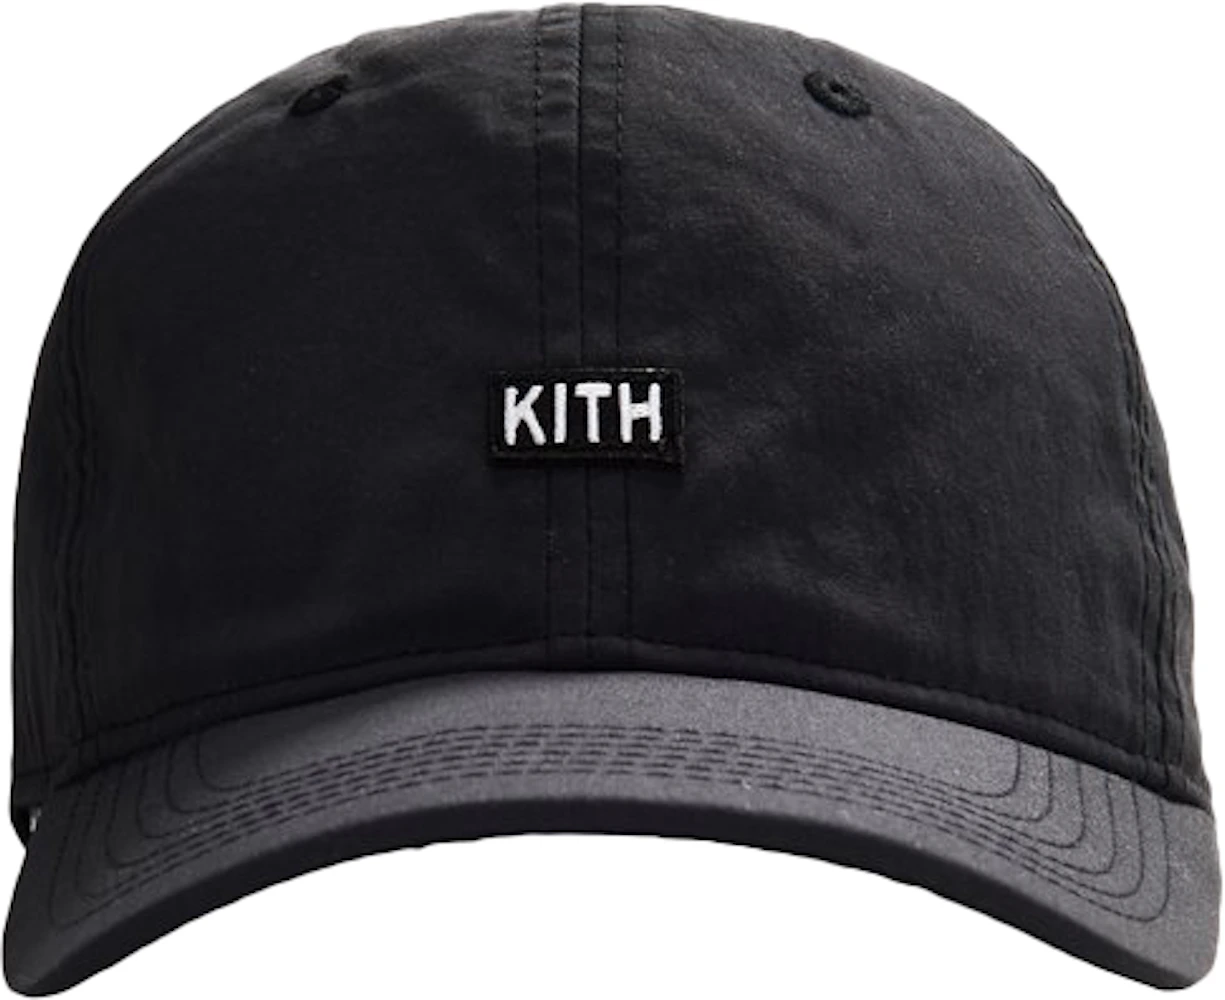 Kith Sport Cap Soft Black - FW19 - US